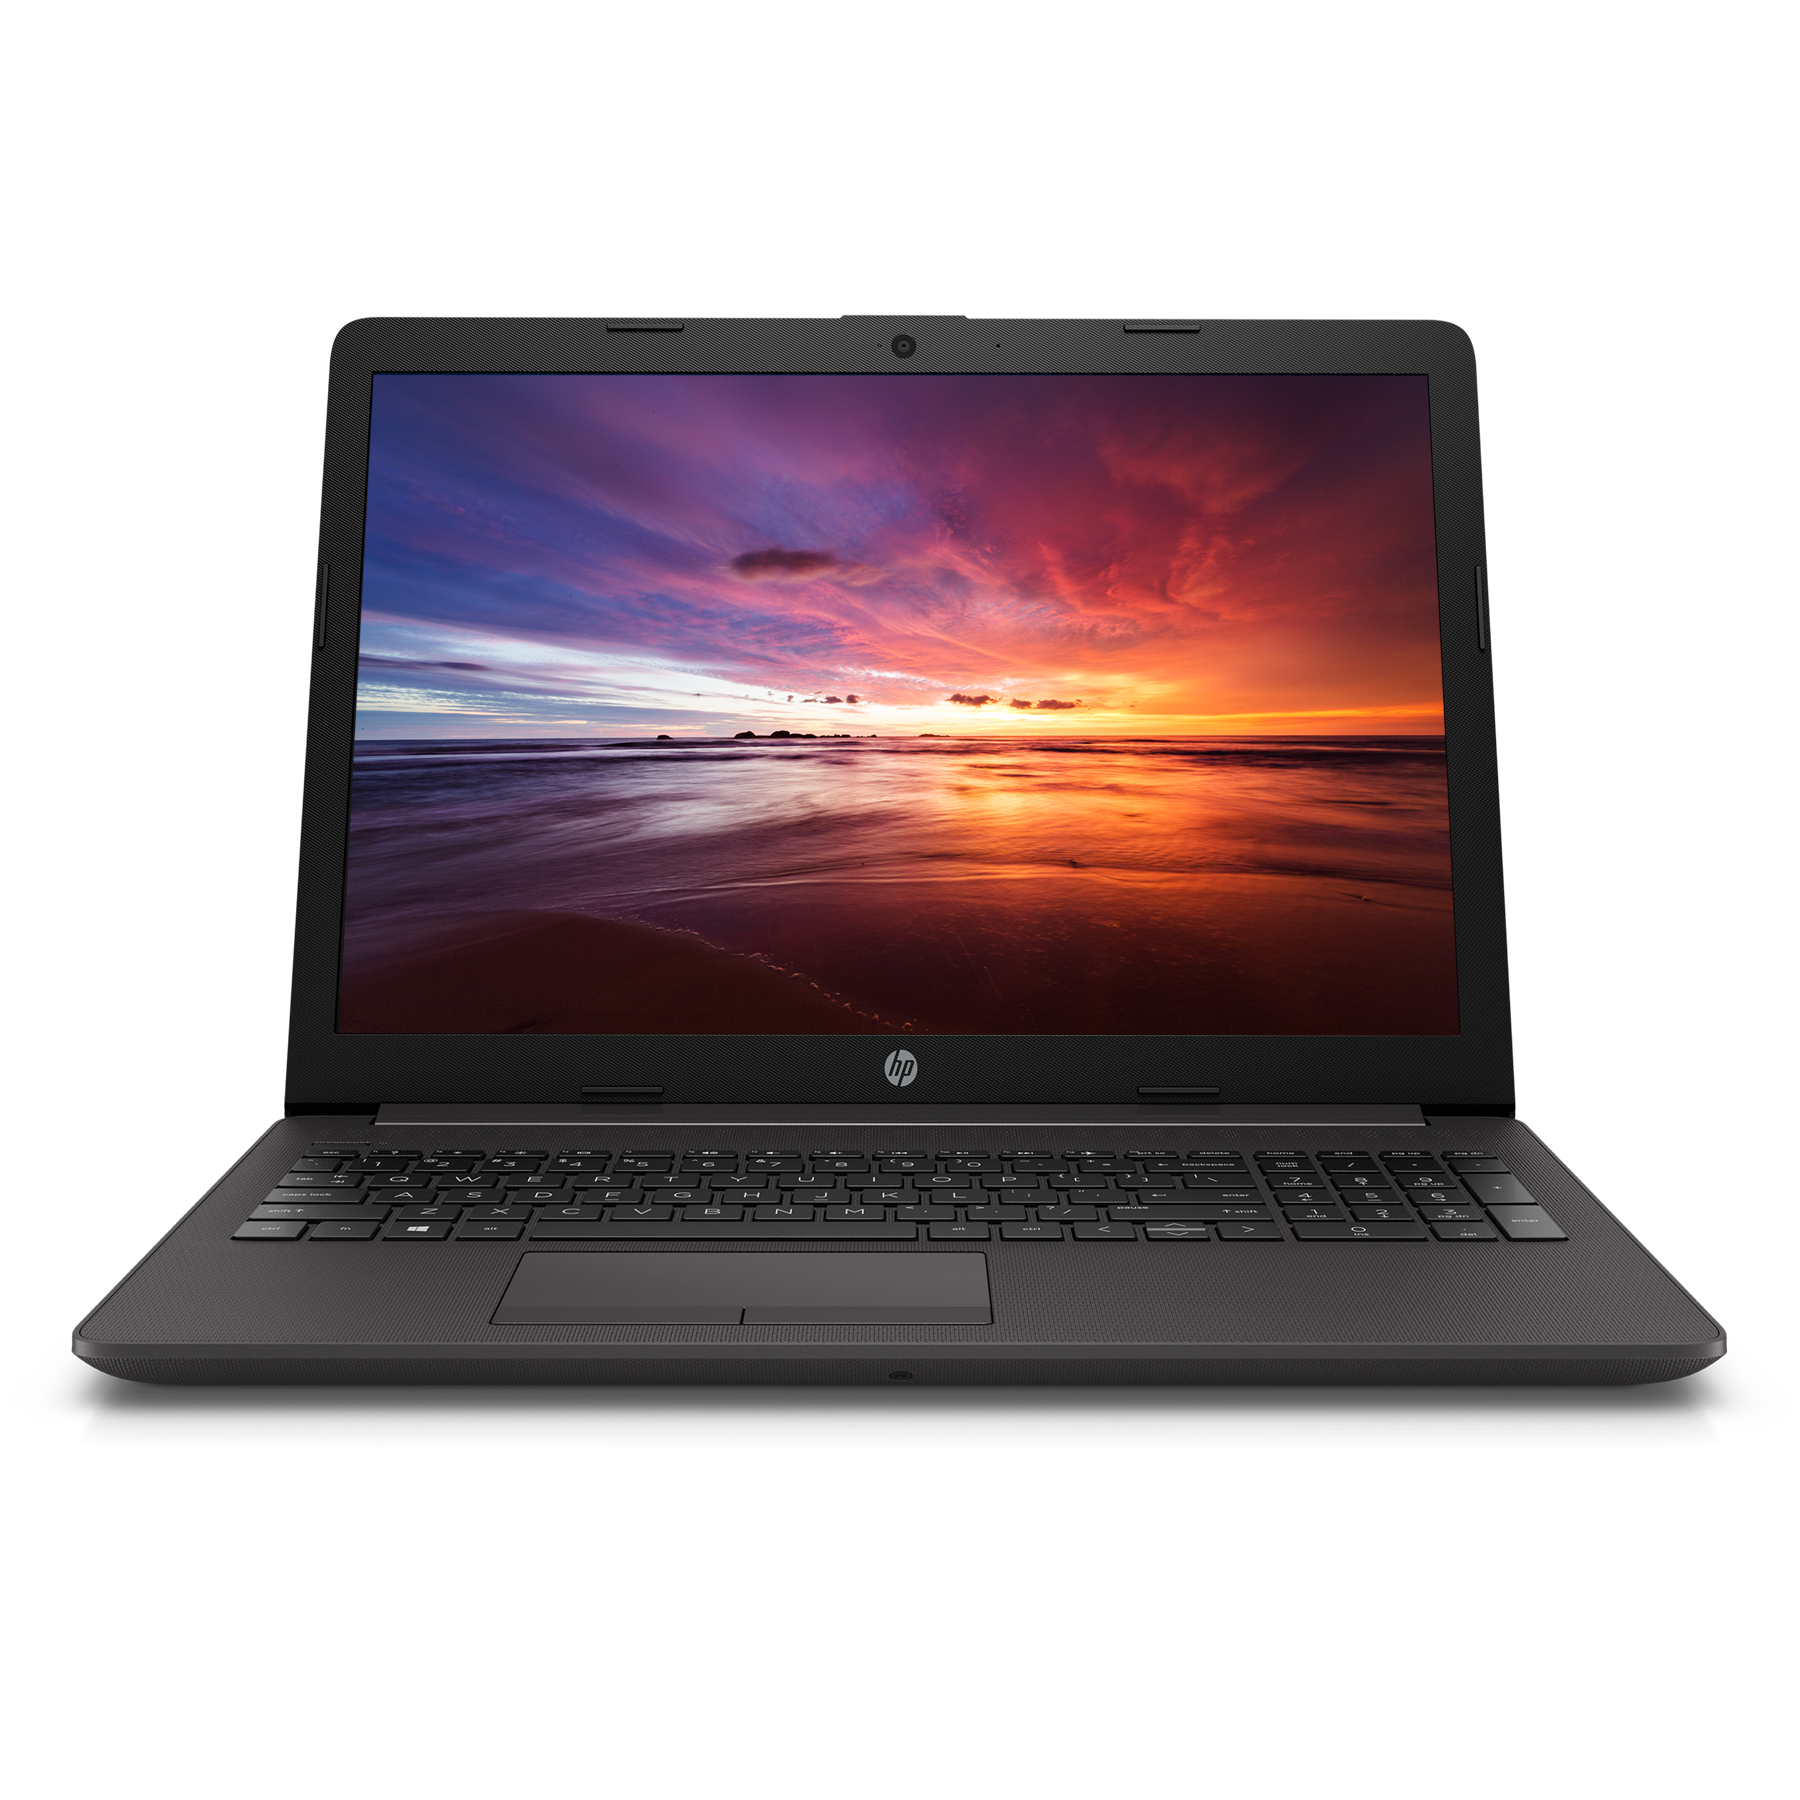 Ноутбук 15.6 1920x1080. HP 255 g7. Ноутбук HP 255 g7 (17s95es). Ноутбук HP 255 g7 15.6. Ноутбук HP 250 g6.